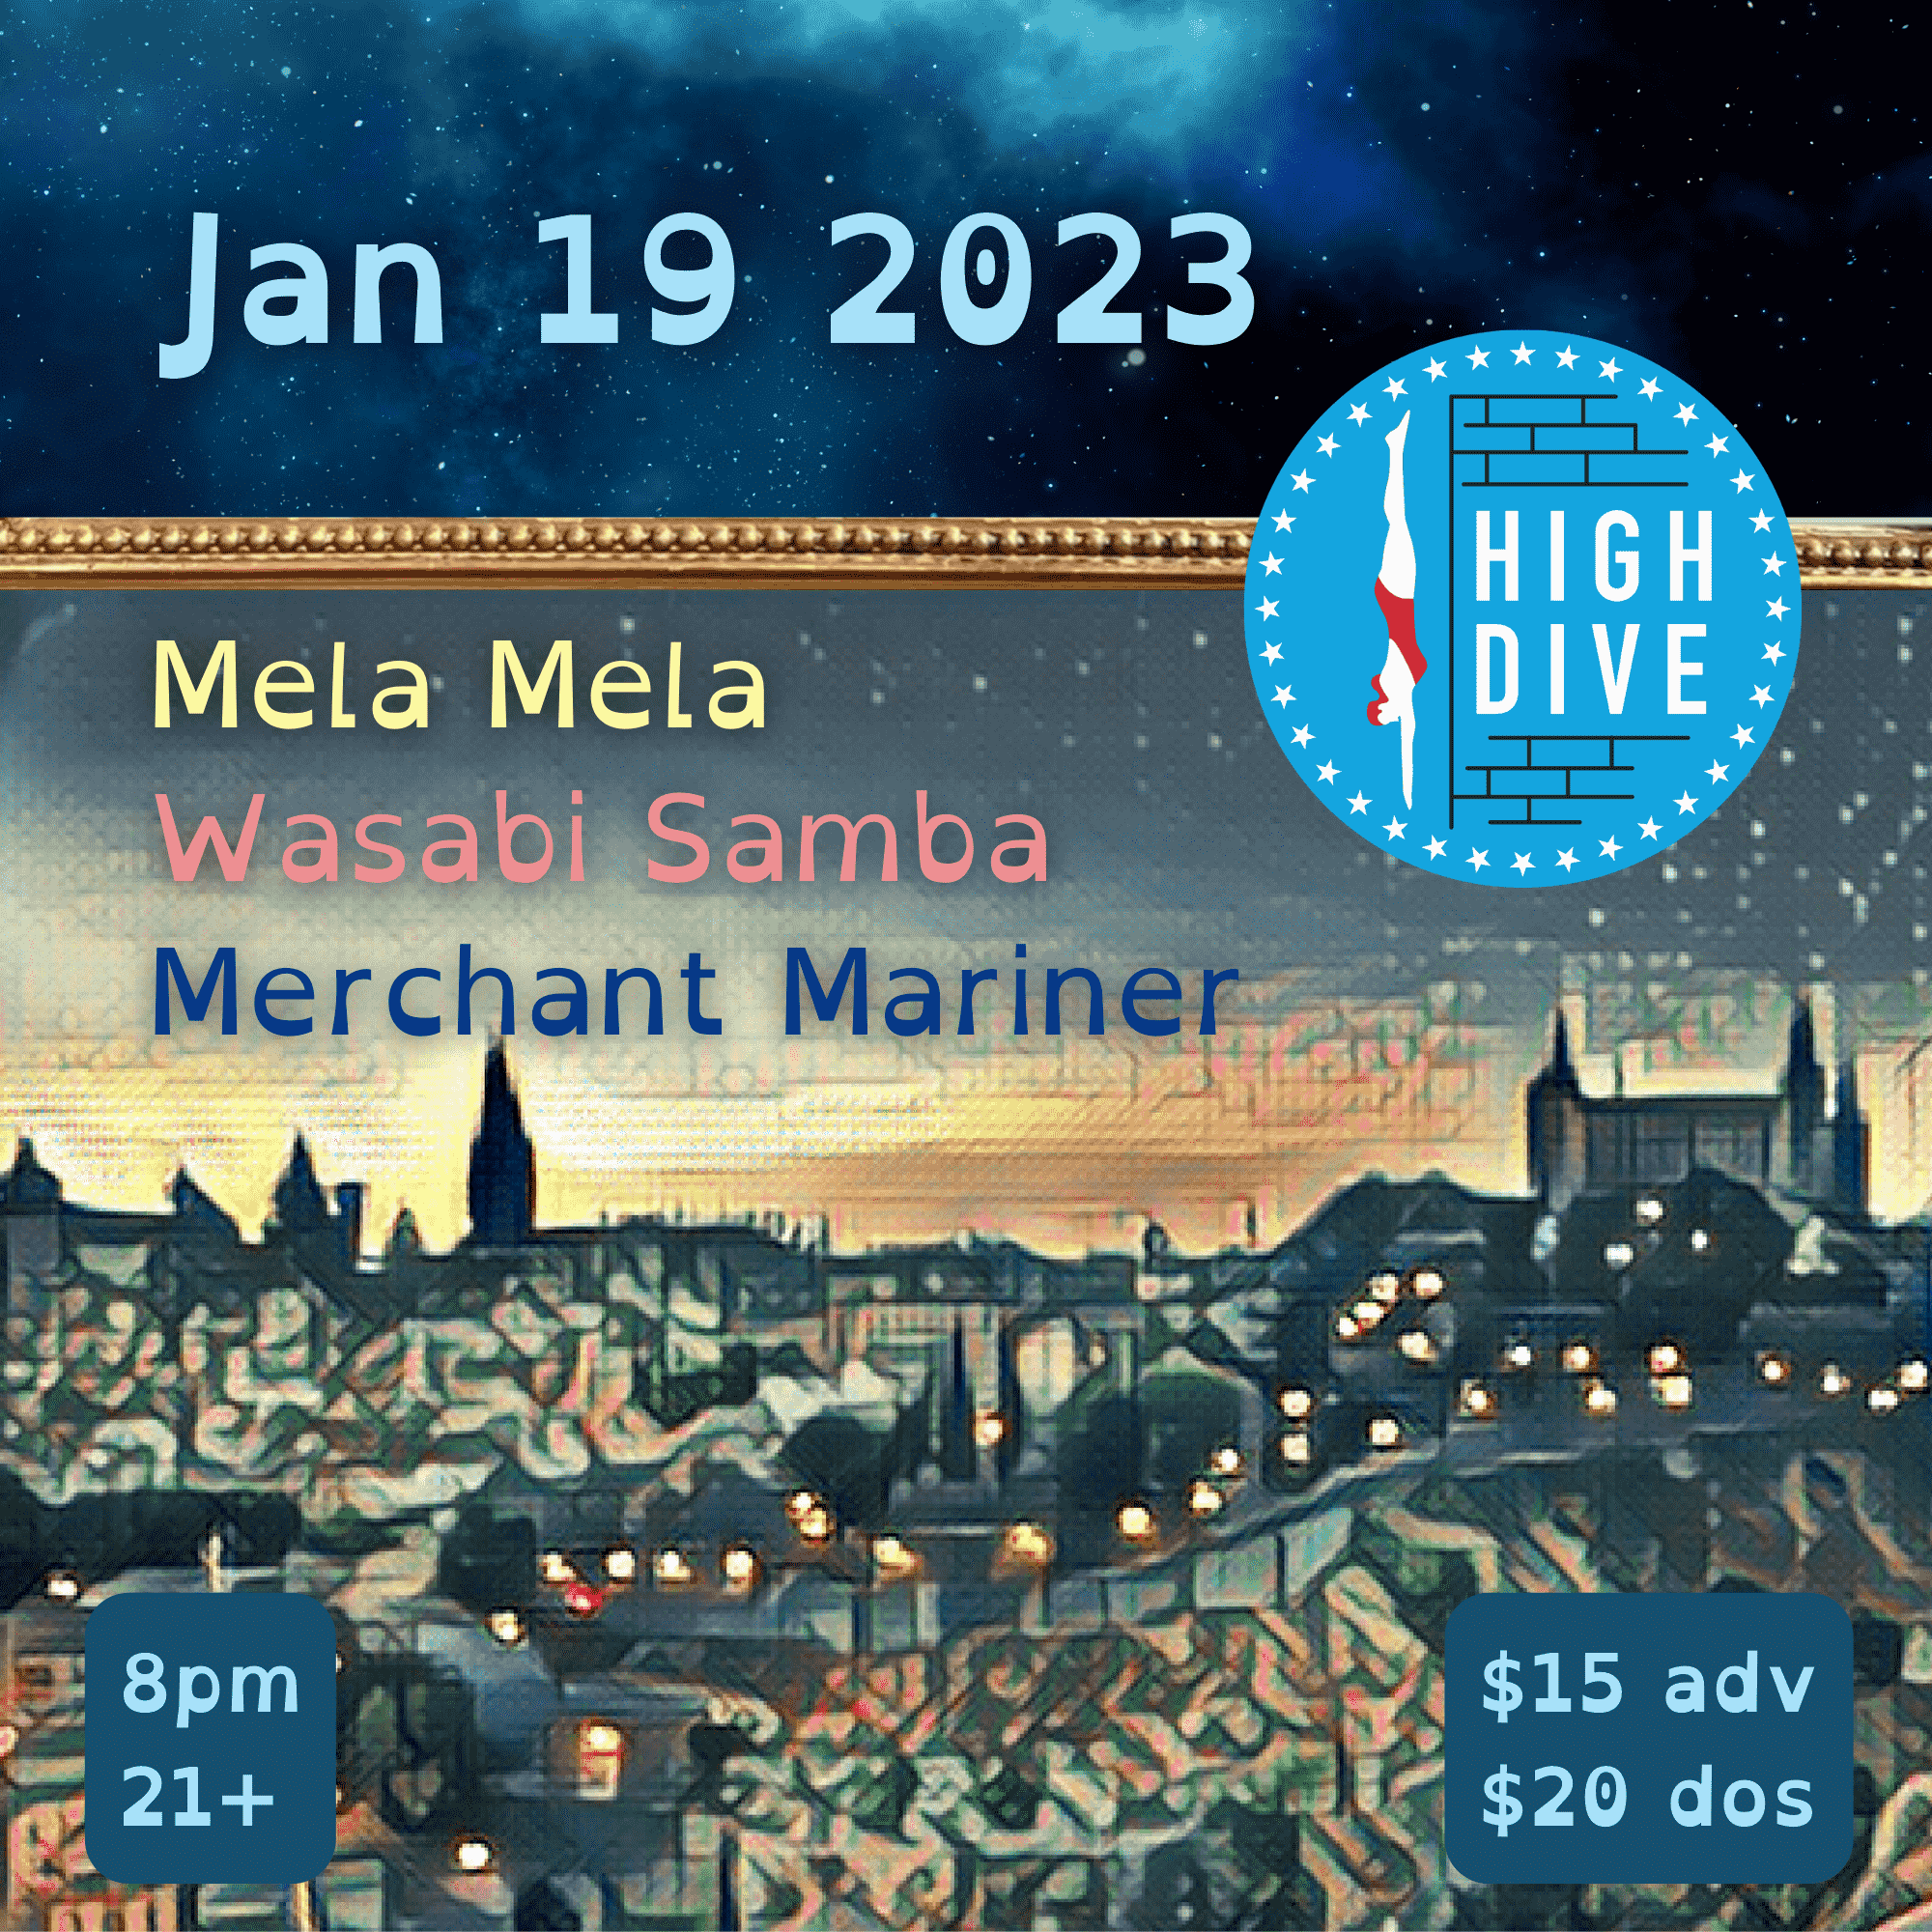 Mela Mela w/ Wasabi Samba, Merchant Mariner Tickets at High Dive in